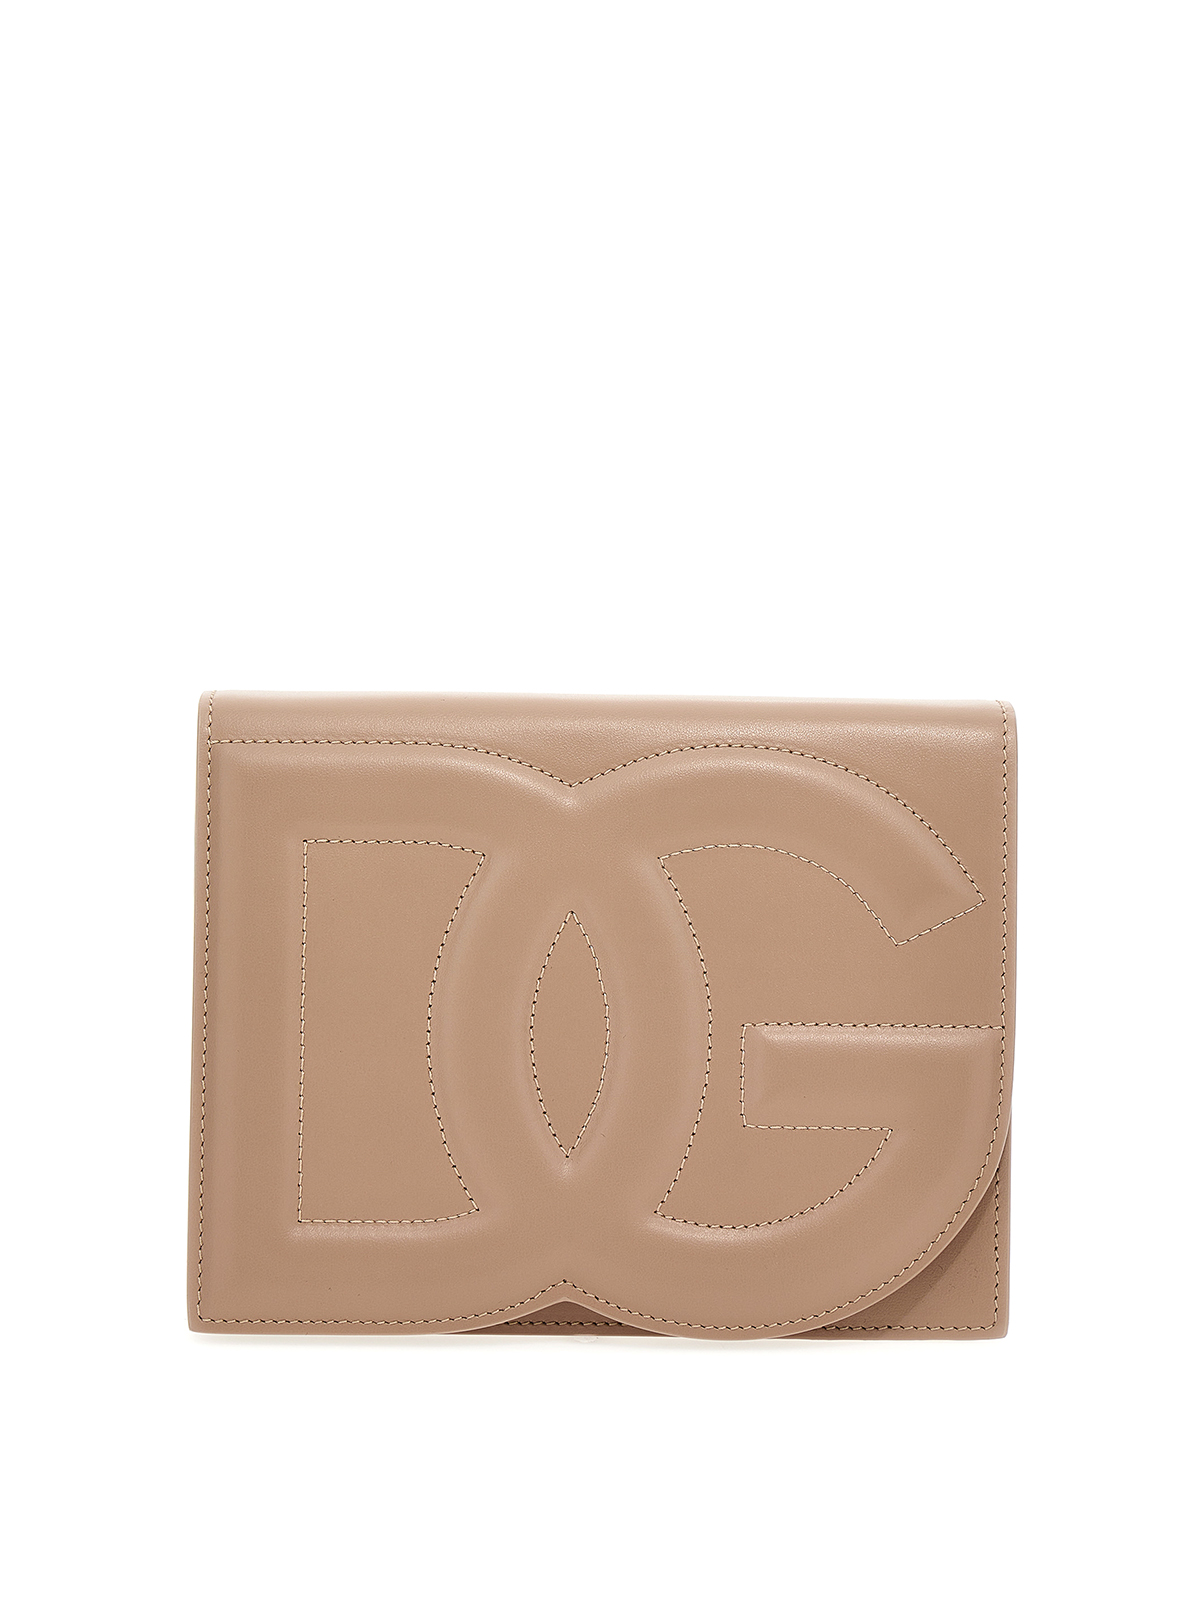 Dolce & Gabbana Dg Logo Crossbody Handbag In Nude & Neutrals